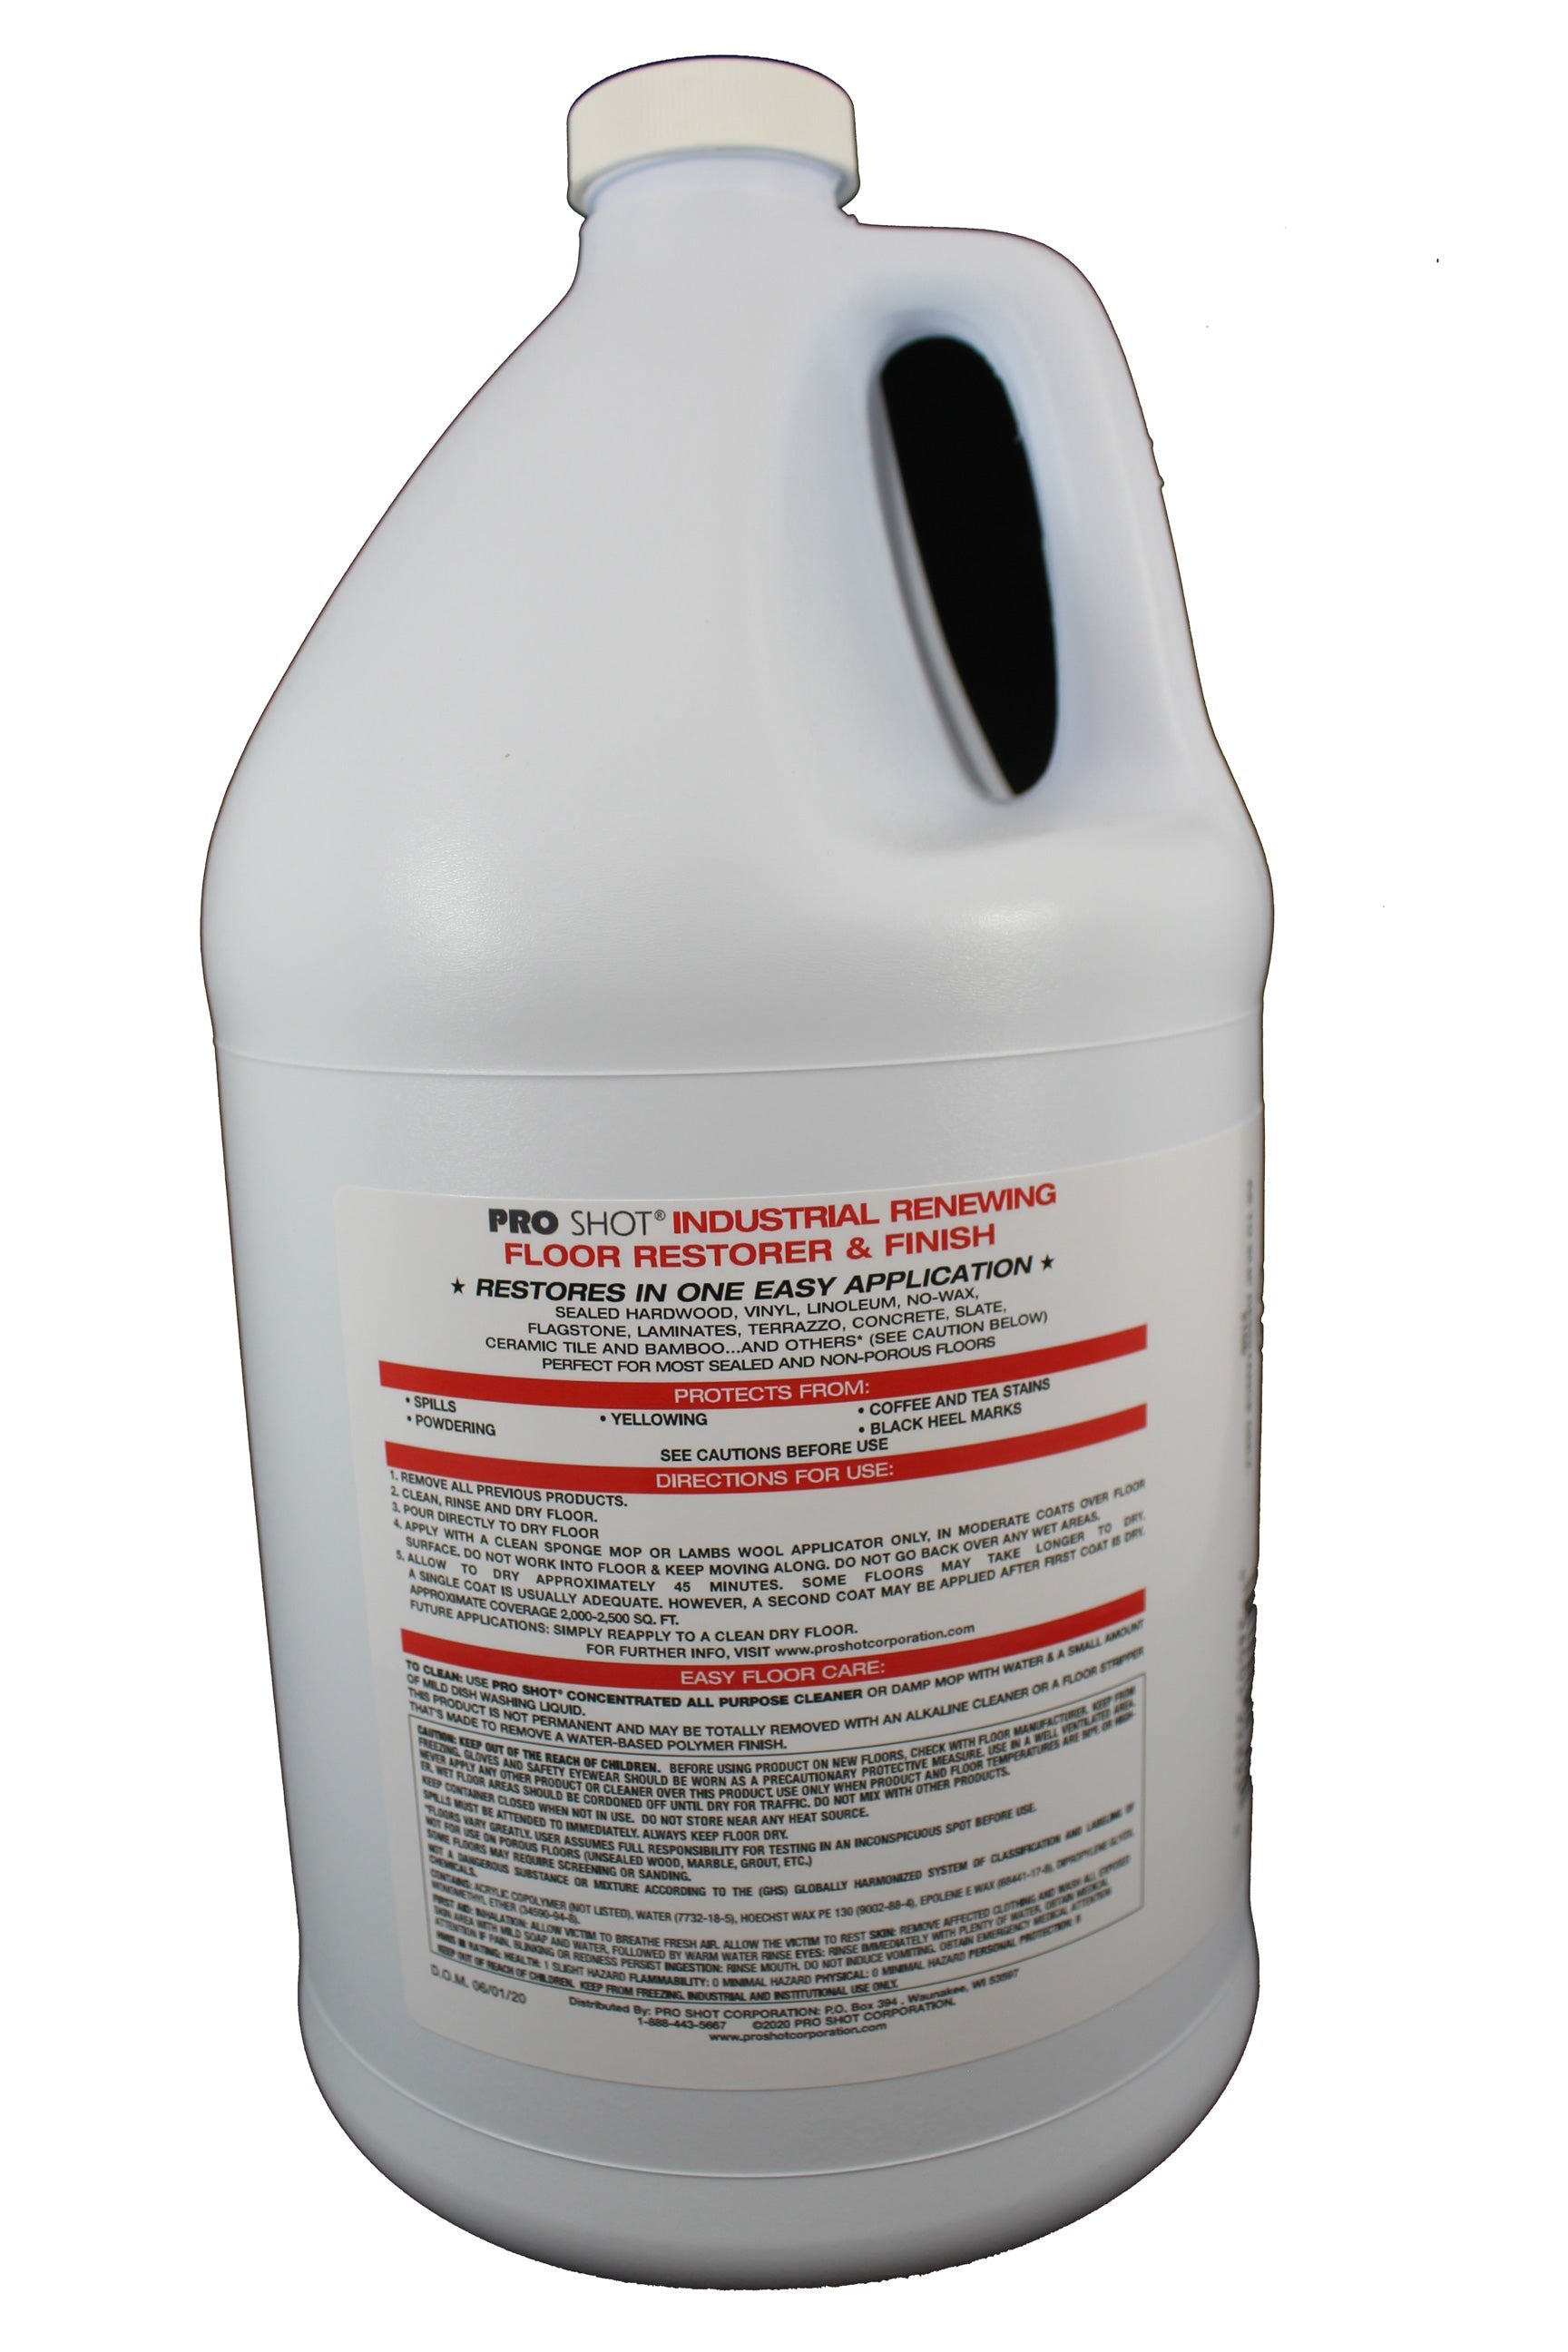 PRO SHOT® Industrial Re-Newing Floor Restorer & Finish one gallon backside of label image